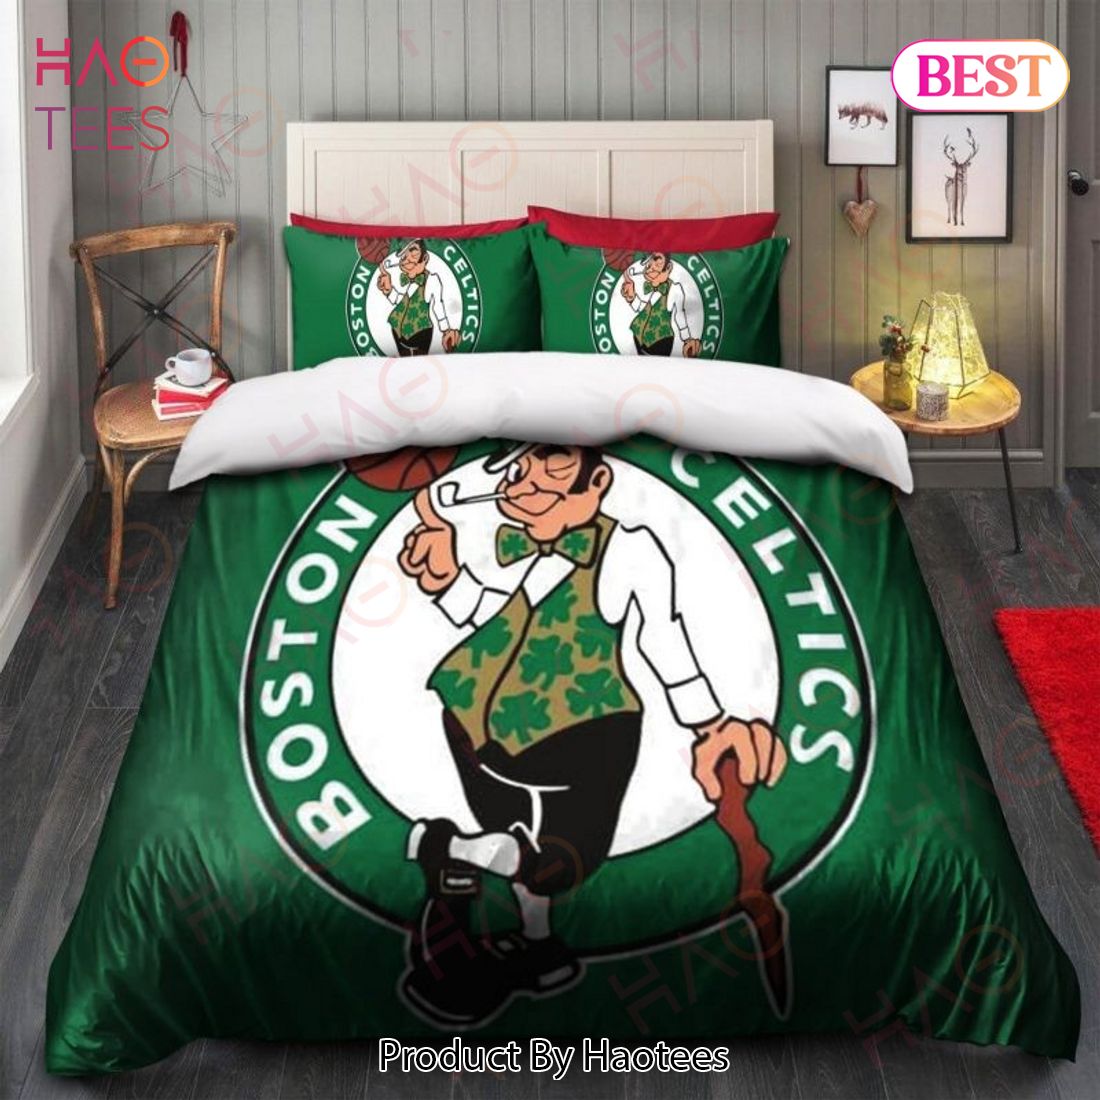 NBA Boston Celtics Big Logo Bedding Duvet Cover Limited Edition